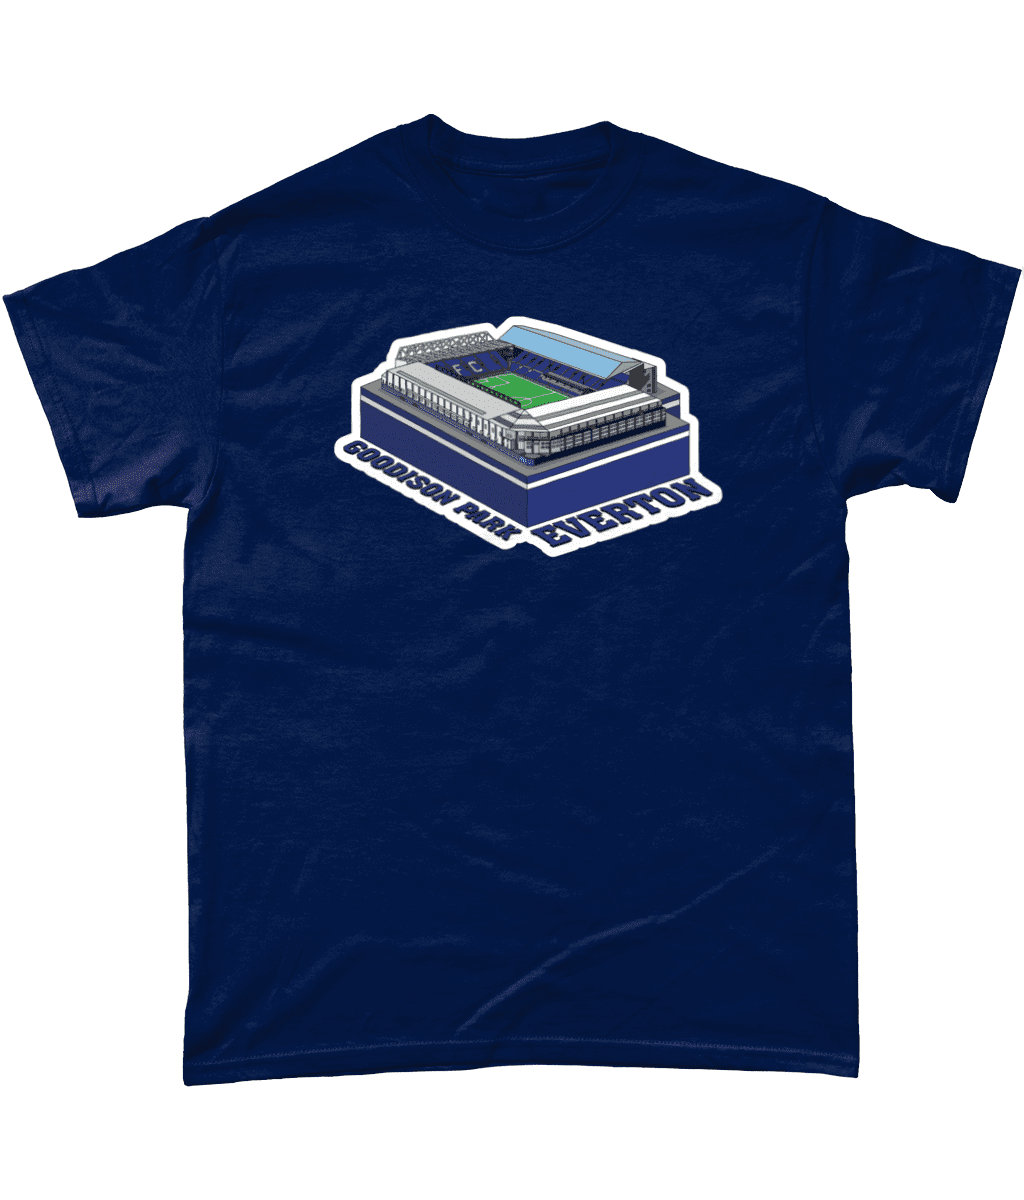 Everton Goodison Park Football Stadium Illustration T Shirt Navy